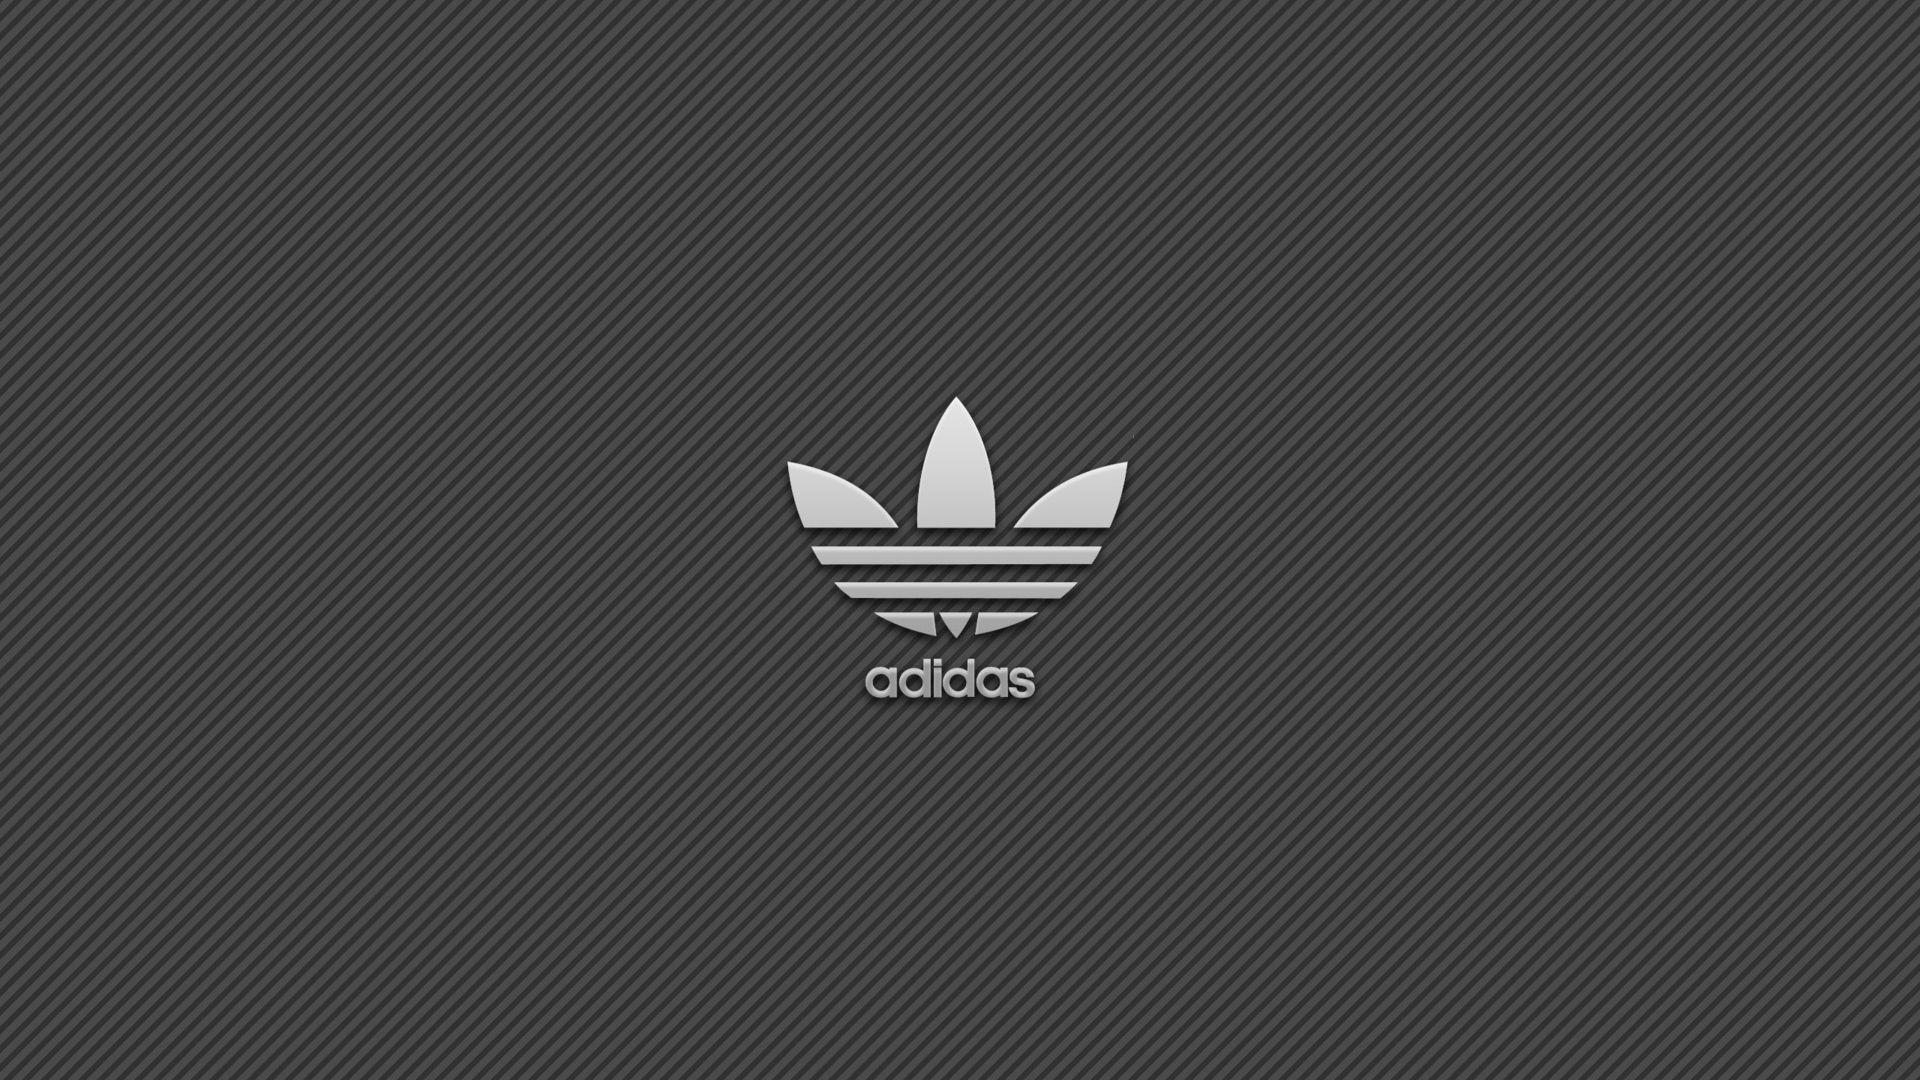 Adidas Logo #Wallpaper